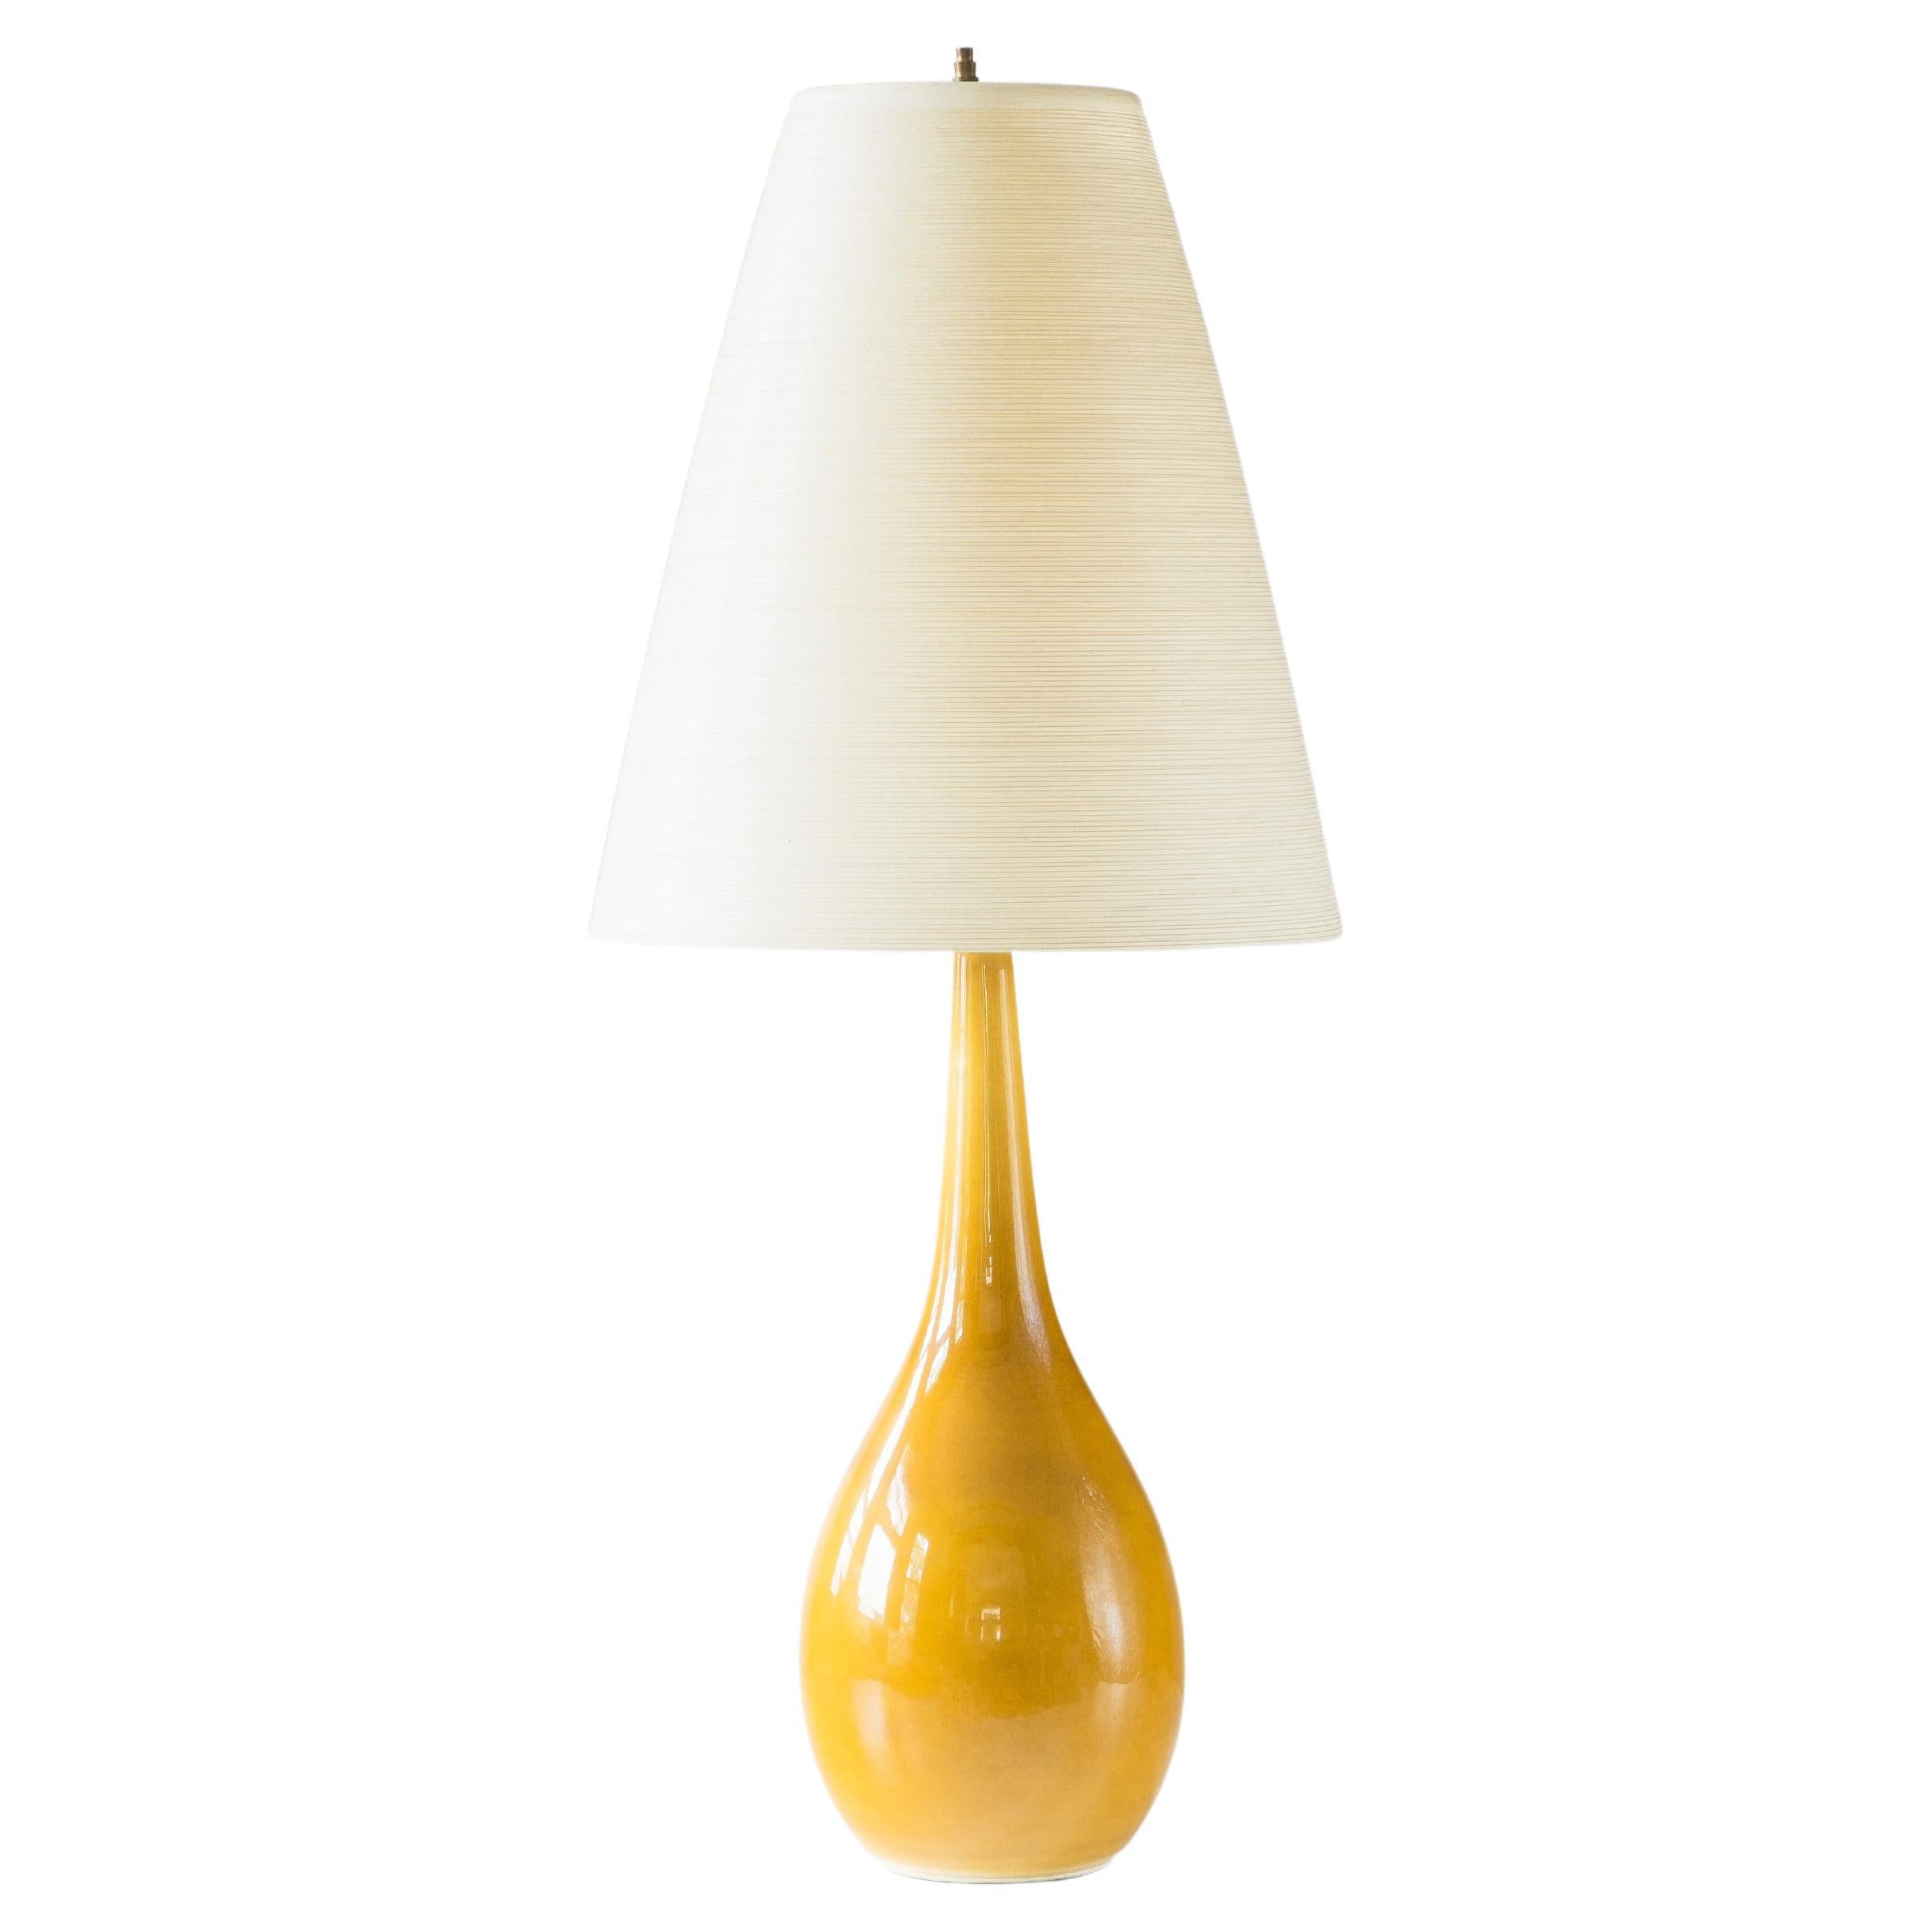 Lotte Bostlund Lamp, Model 100, Tall Ceramic Lamp with Fiberglass Shade